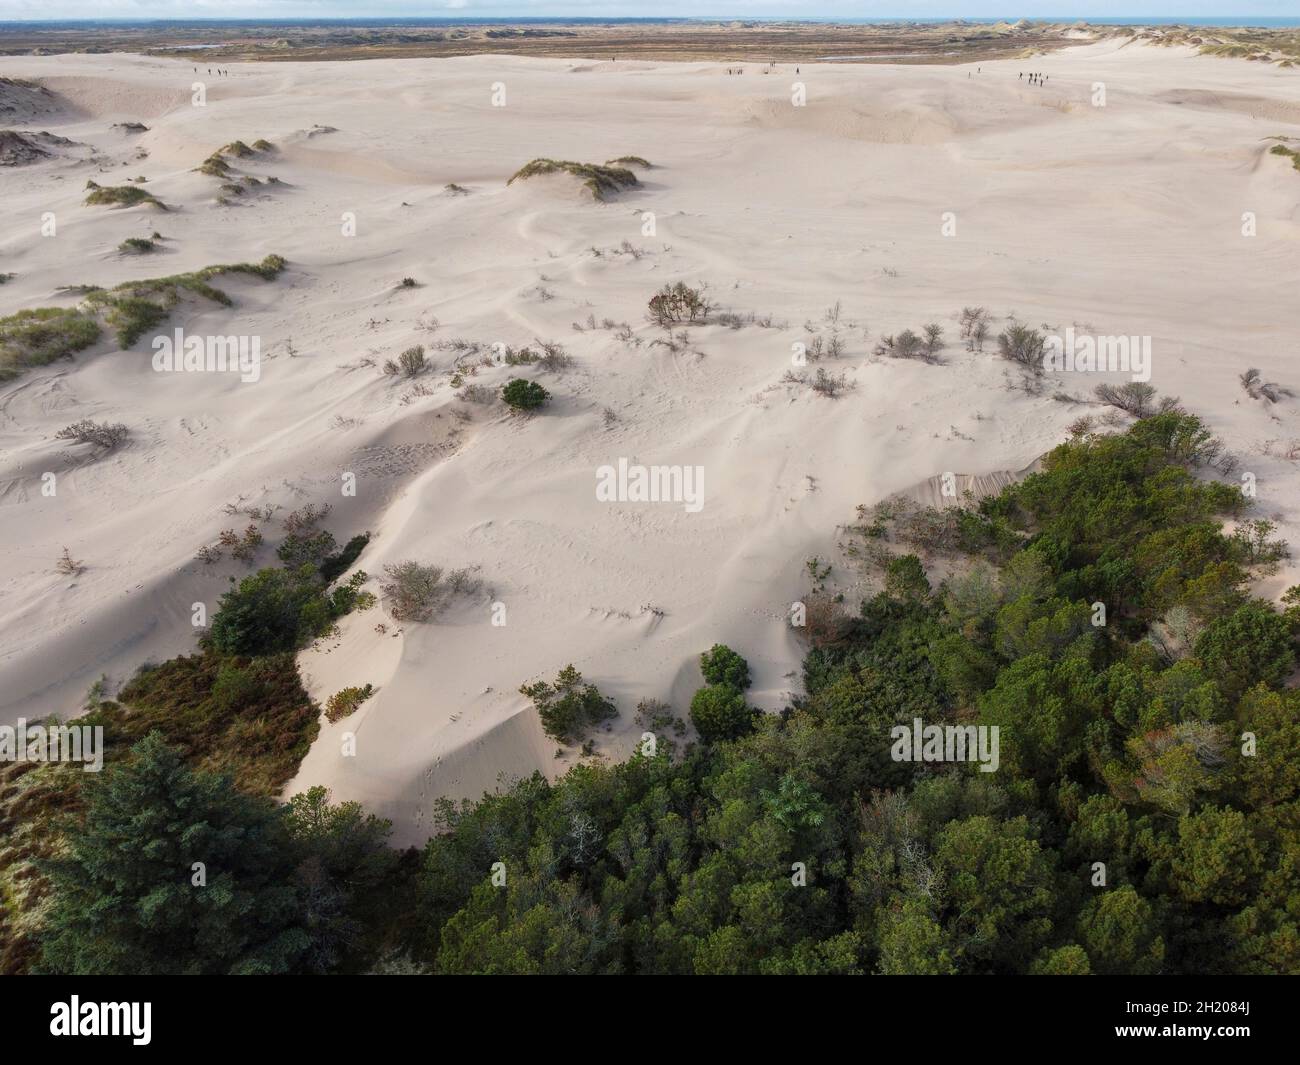 Råbjerg Mile is a migrating coastal dune between Skagen and Frederikshavn, Denmark. The migrating sand covers complete trees. Stock Photo